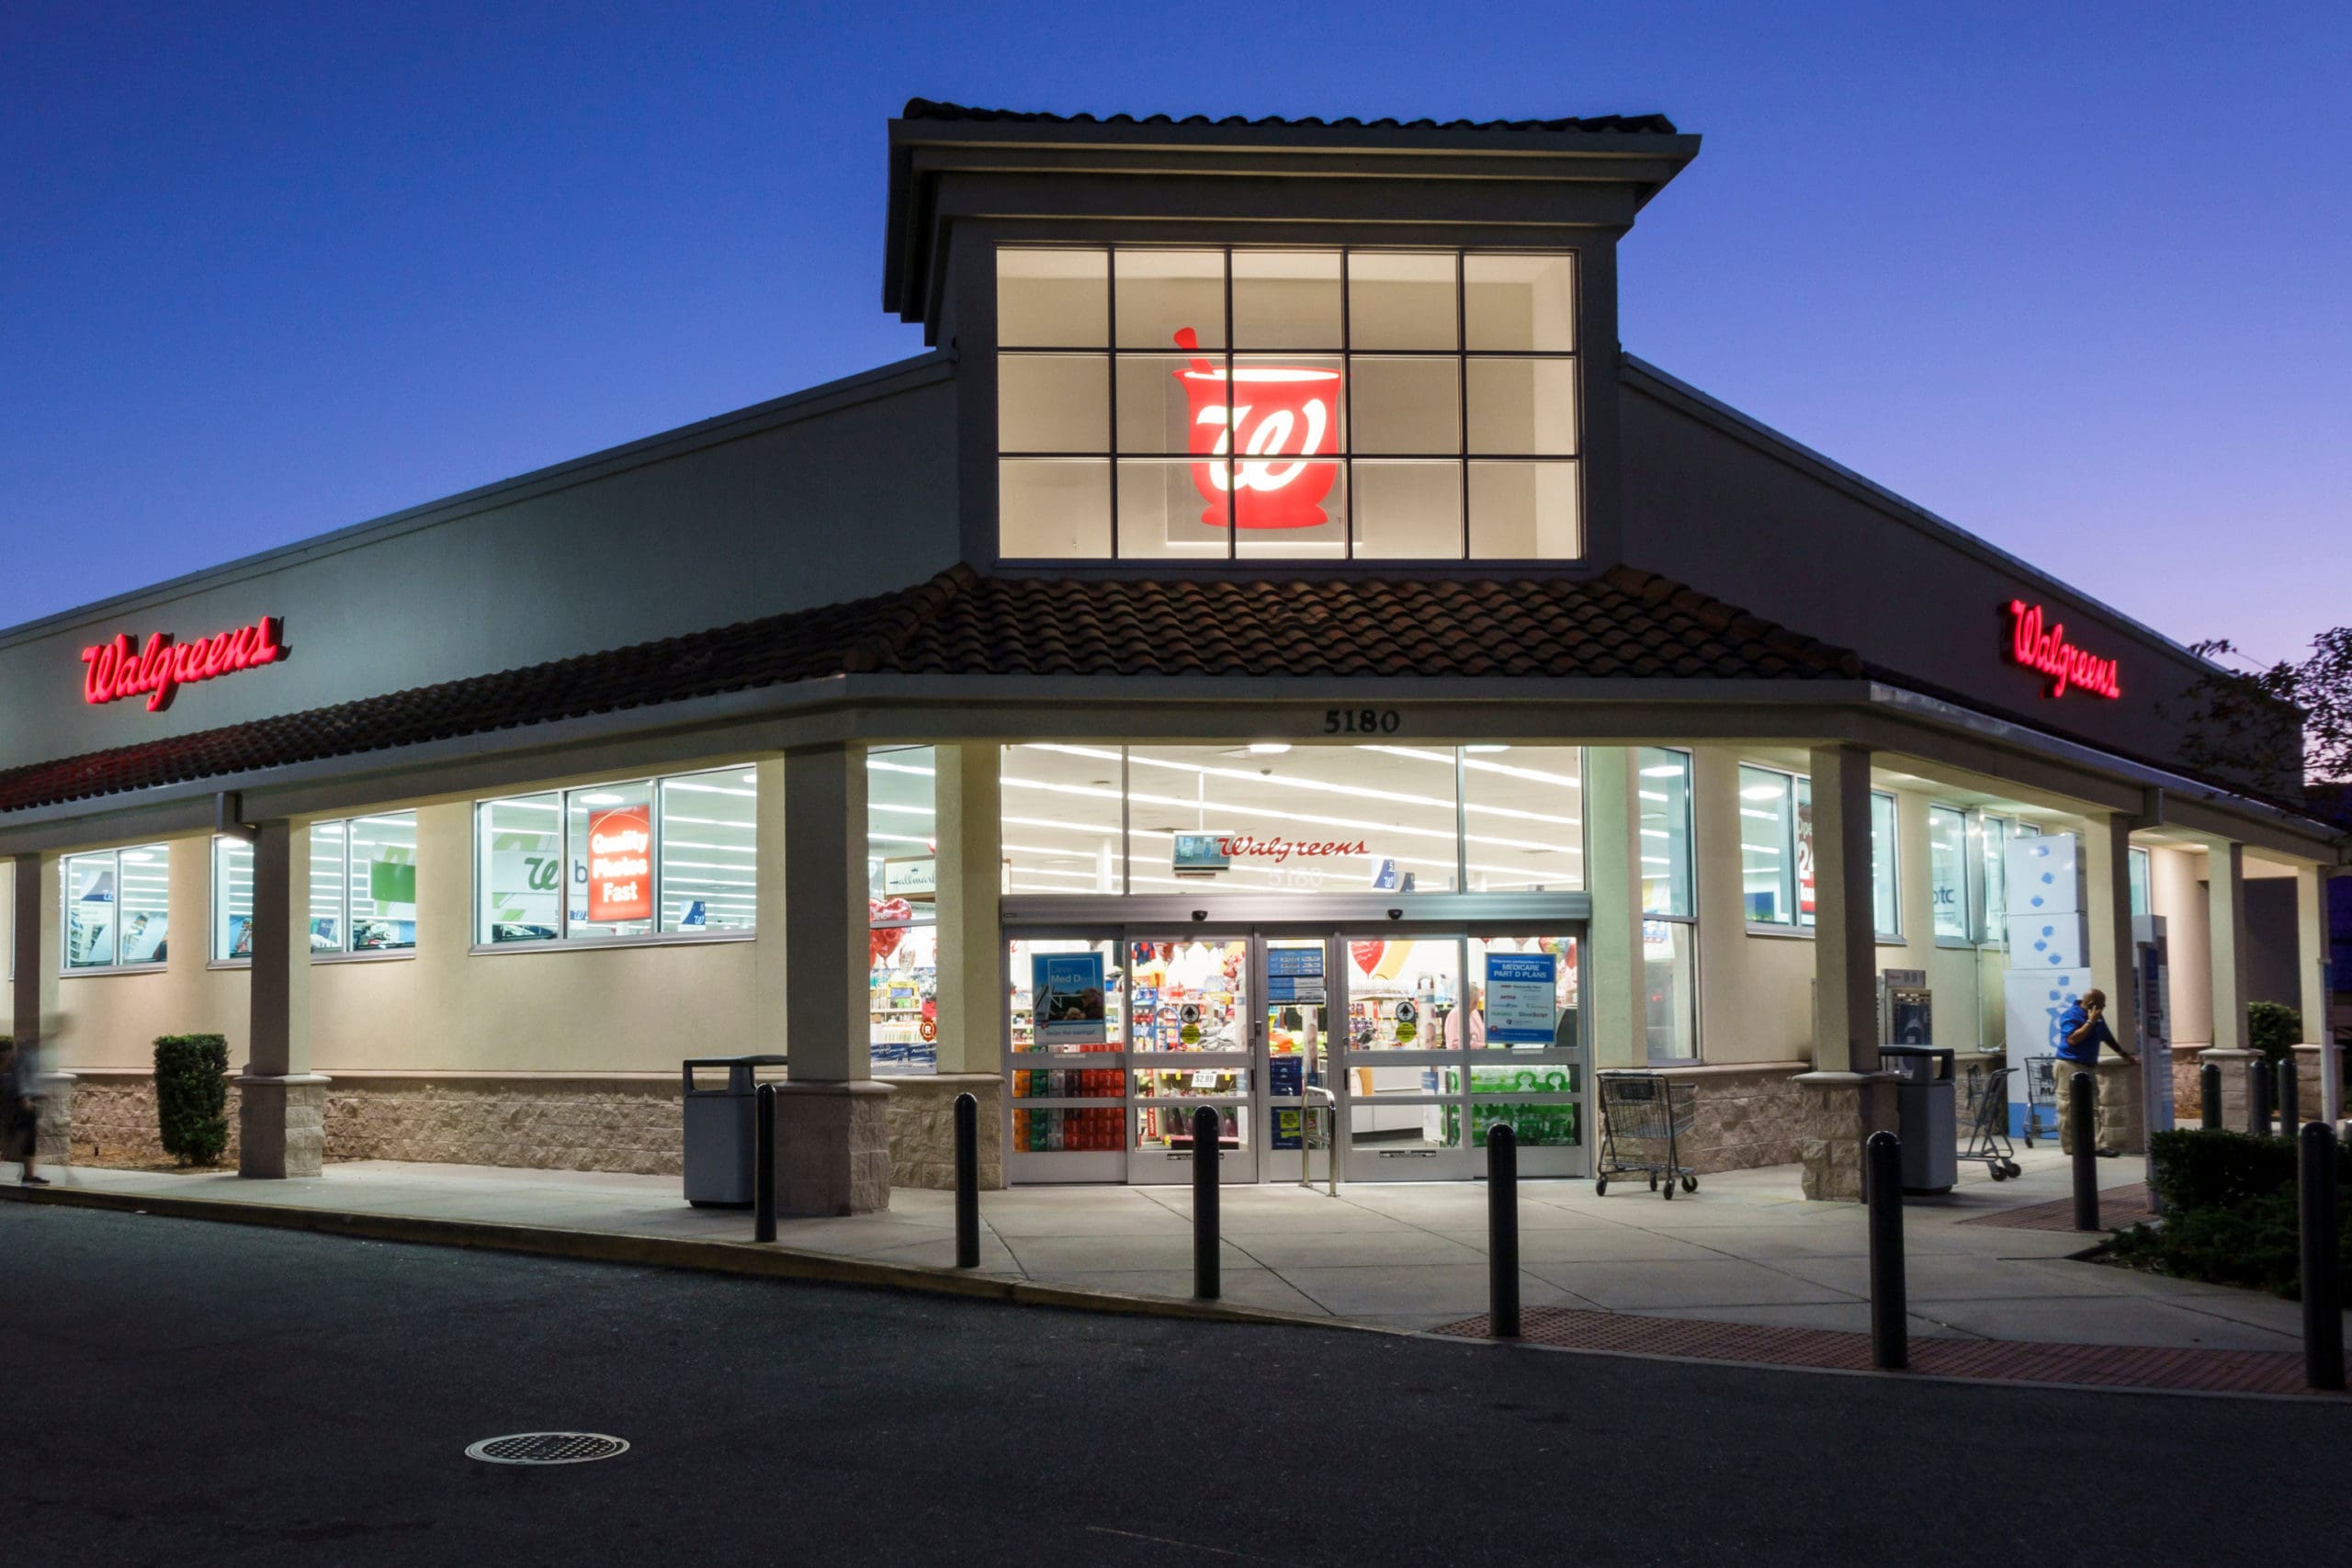 Walgreens plans to close 200 U.S. stores, according to new SEC filing